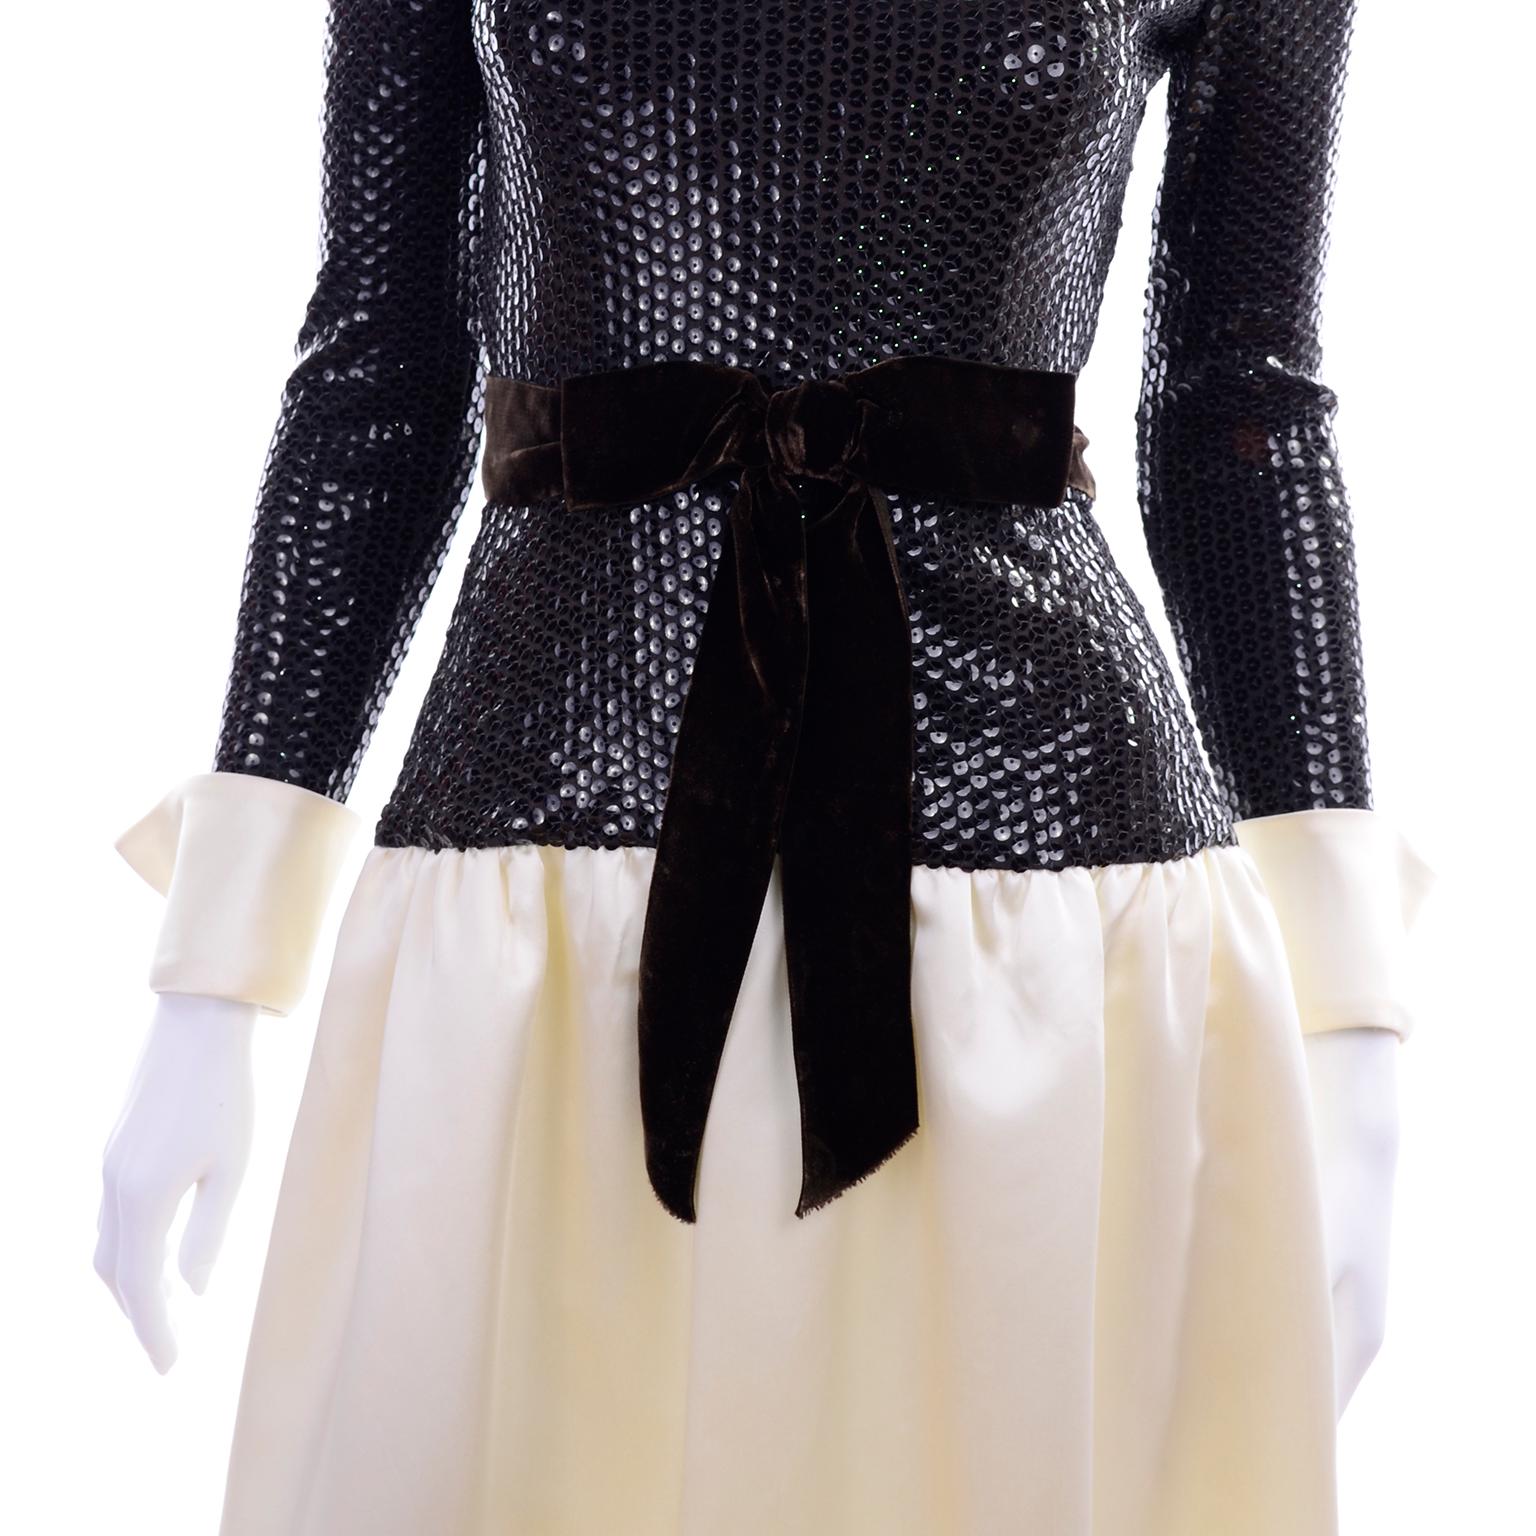 Kiki Hart Vintage Evening Dress Ivory Satin W Brown Sequin Bodice & Velvet Bow For Sale 8